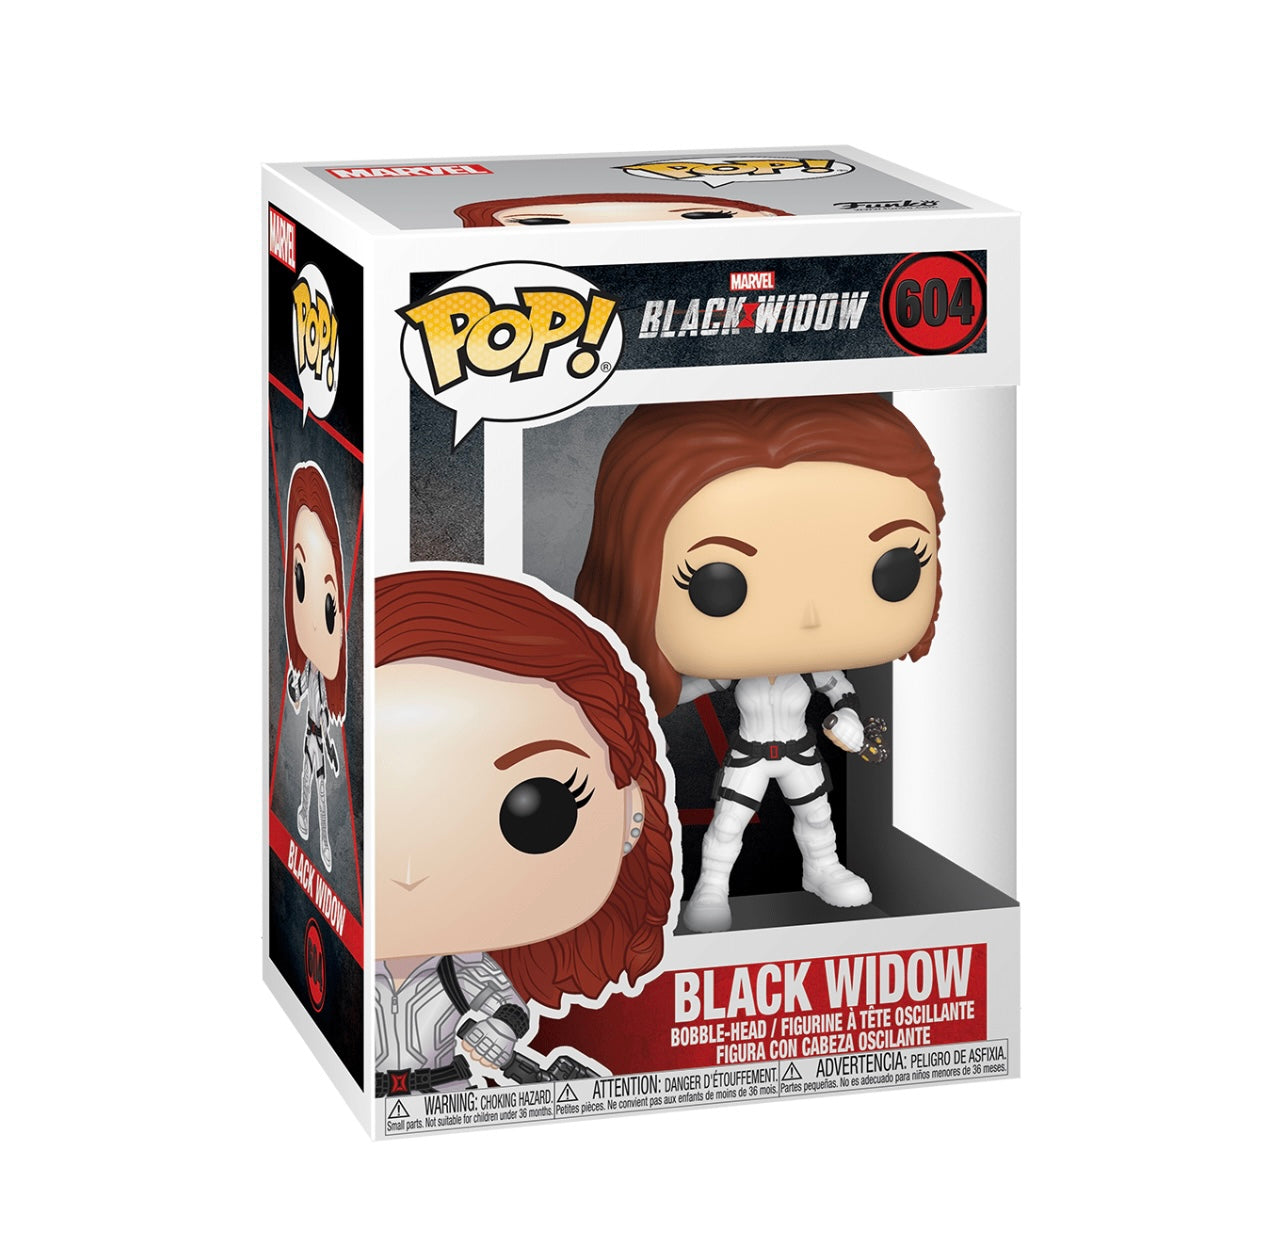 POP! Marvel Black Widow #604